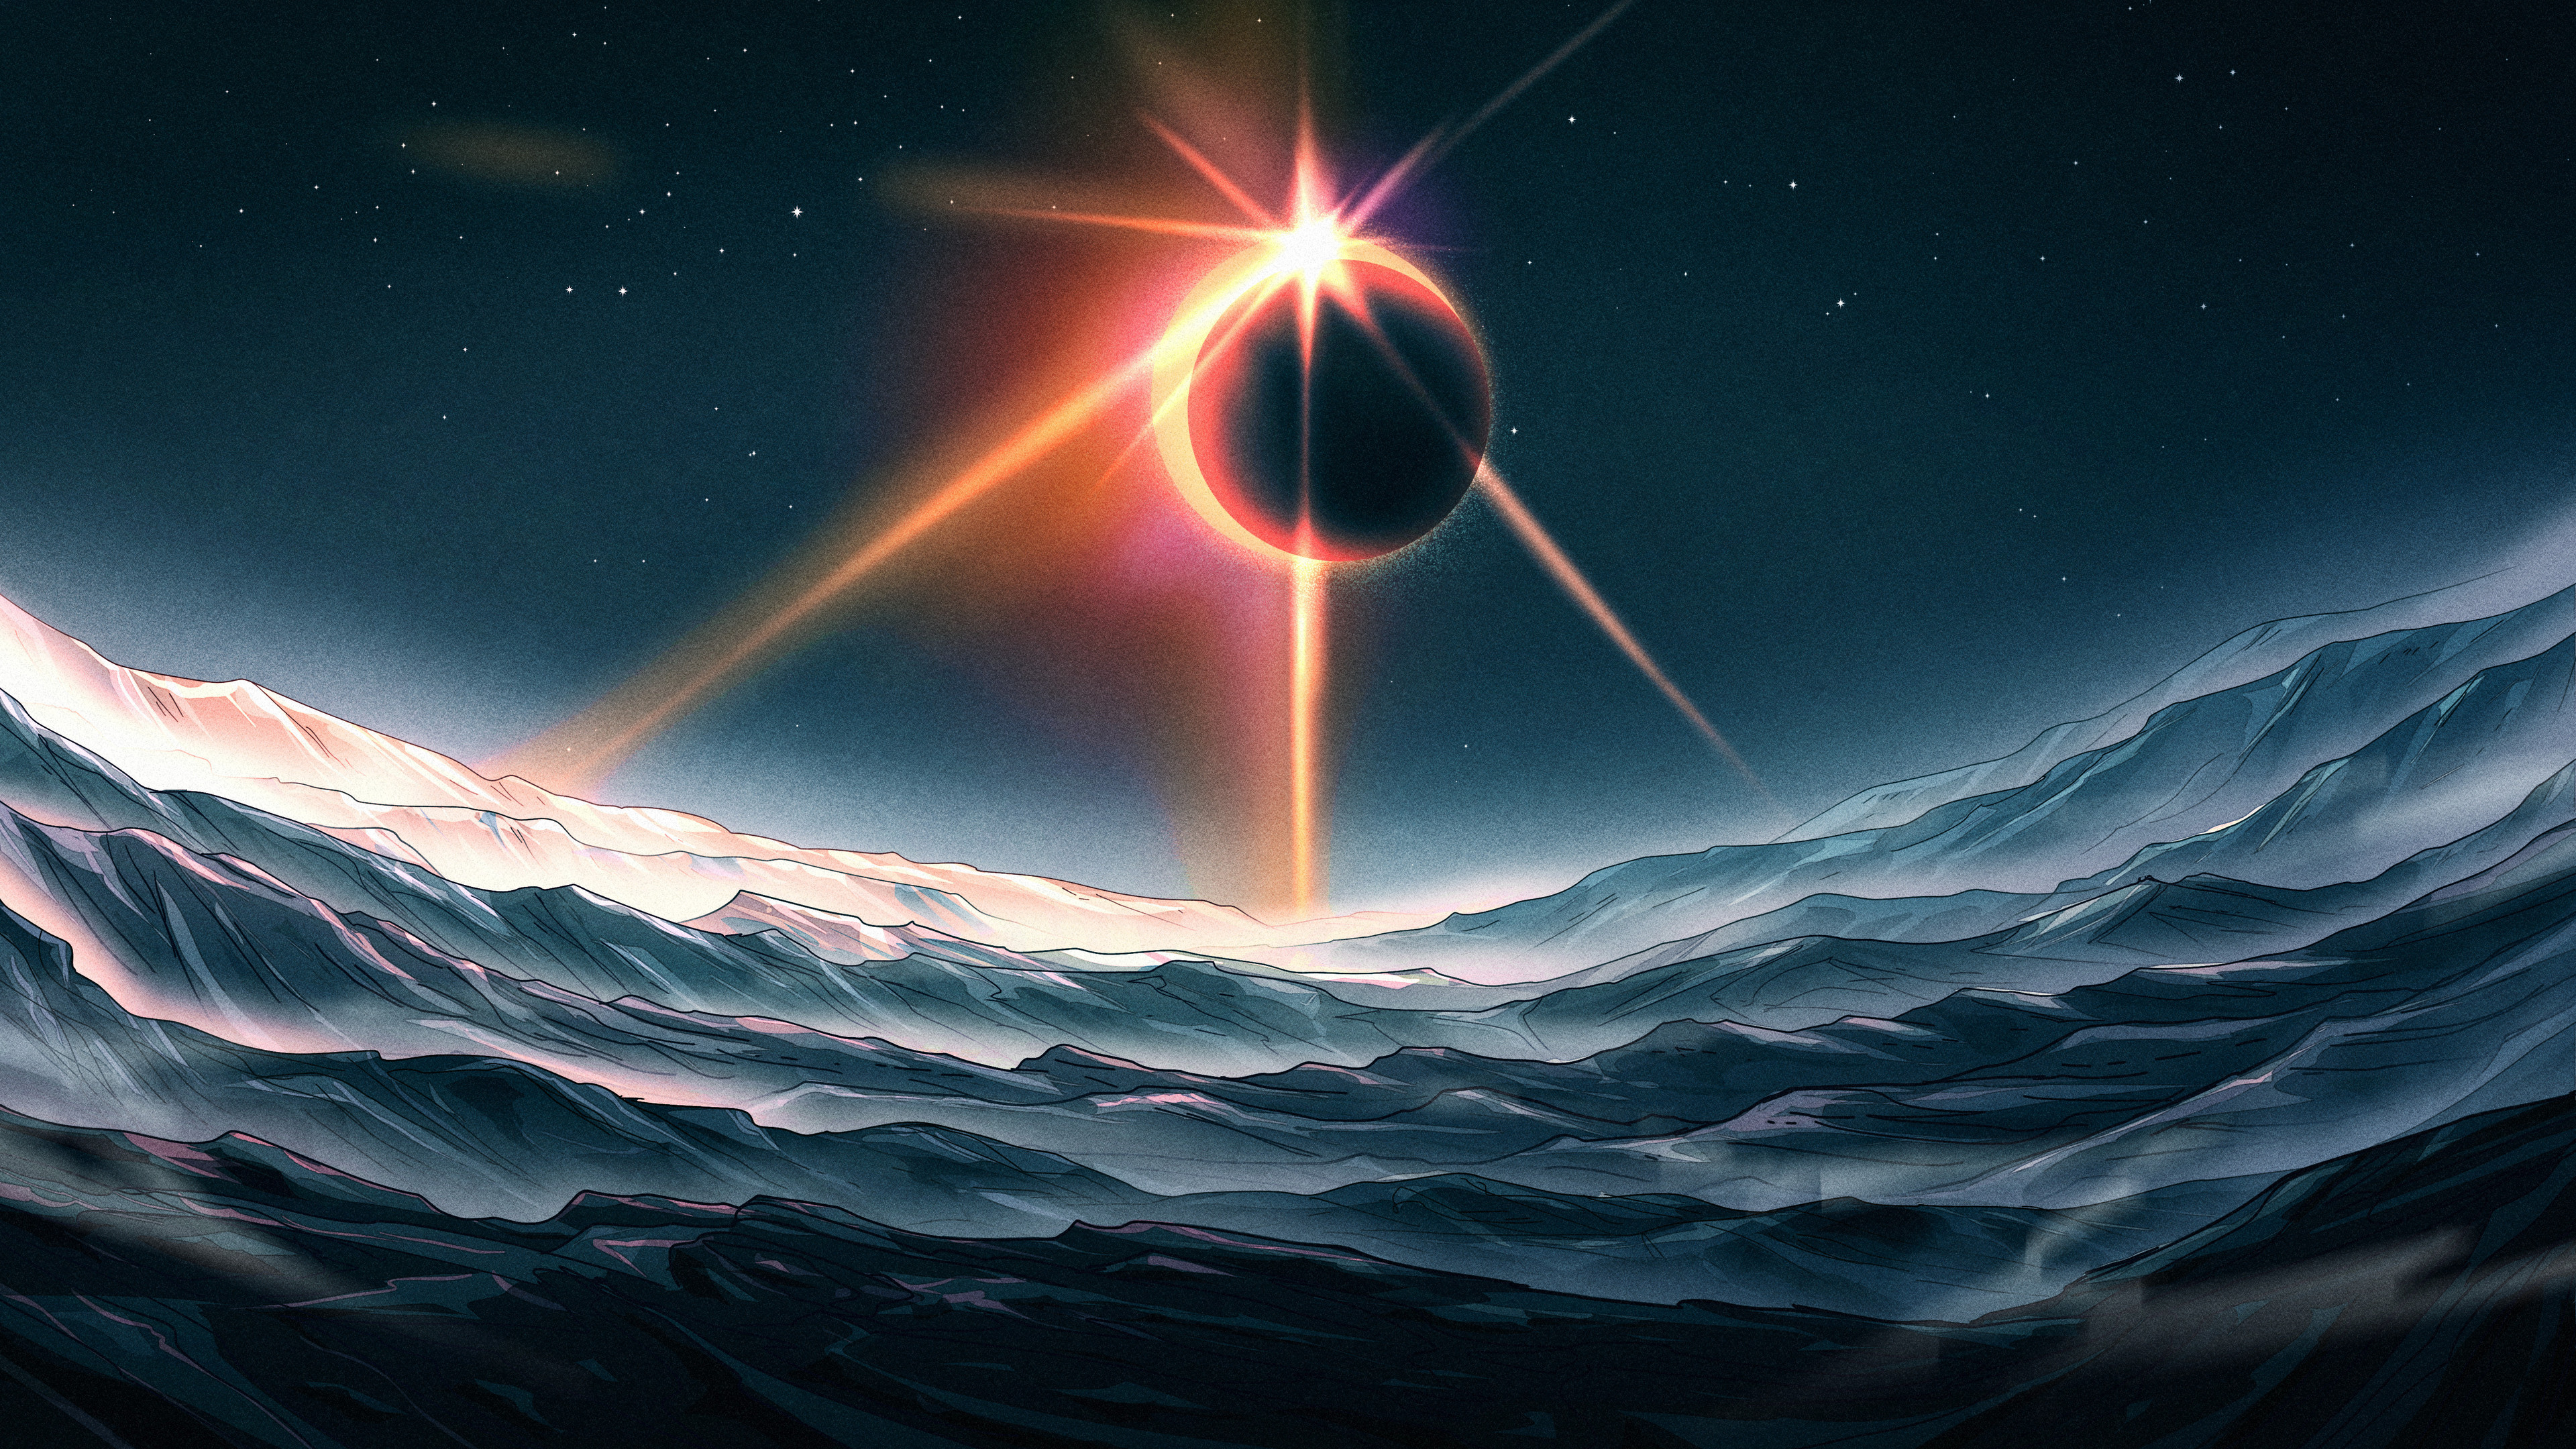 Christian Benavides Digital Art Fantasy Art Eclipse Starry Night Water Moon 3840x2160